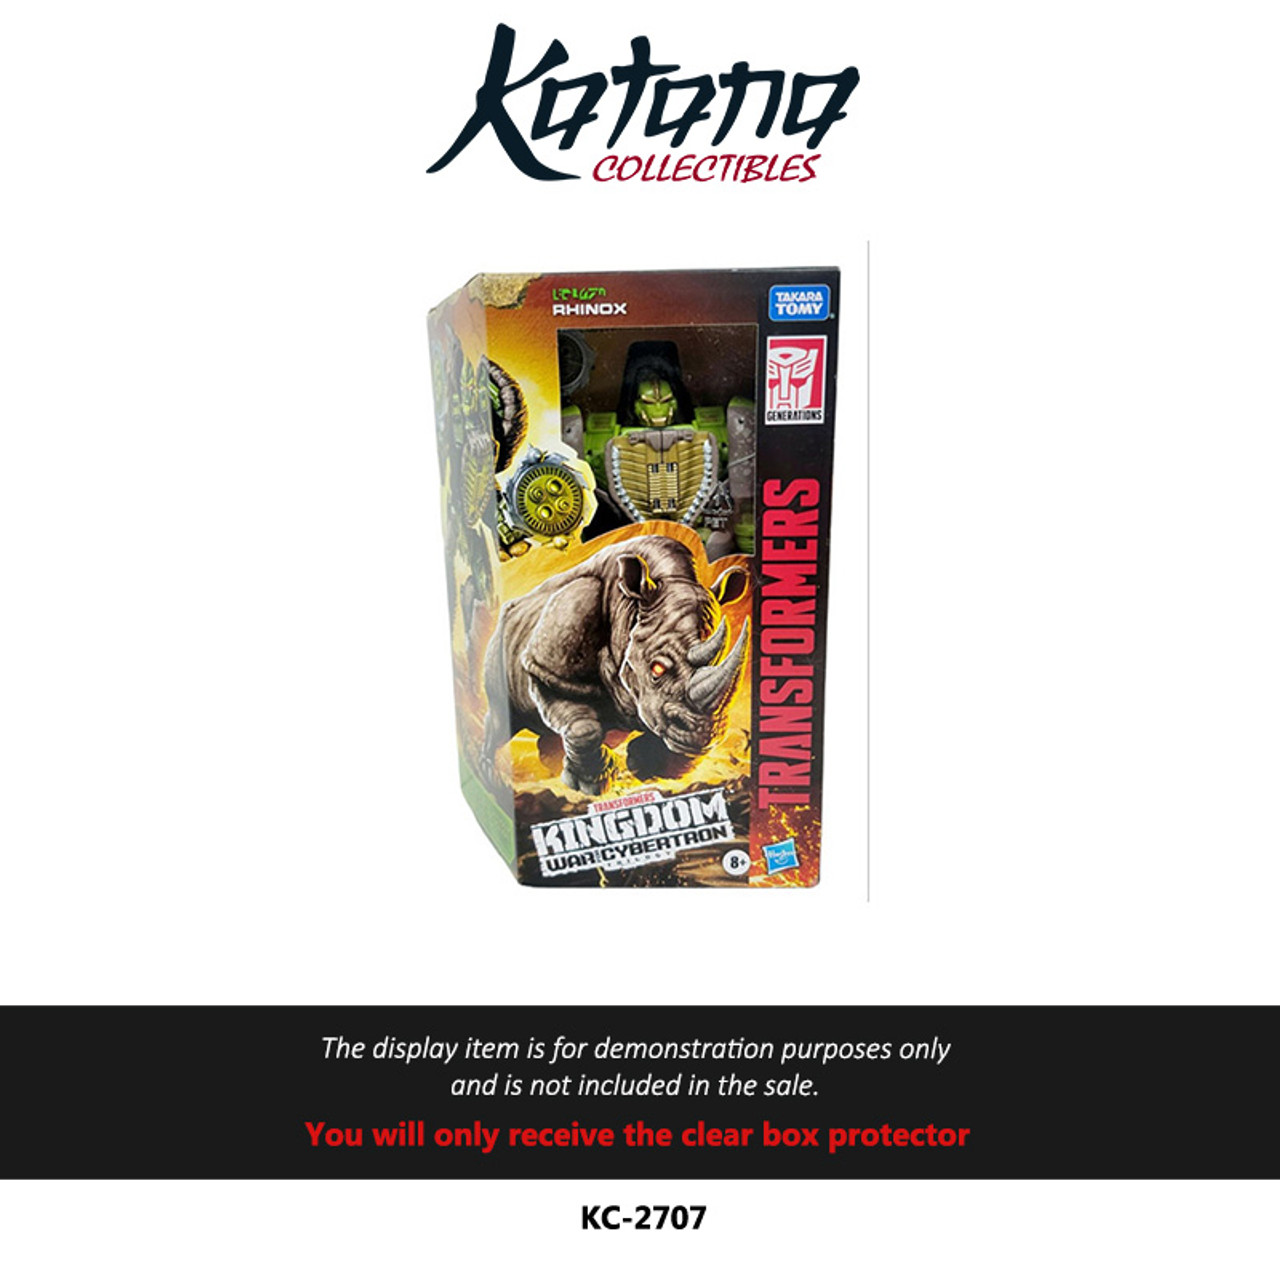 Katana Collectibles Protector For Transformers Kingdom War for Cybertron Rhinox